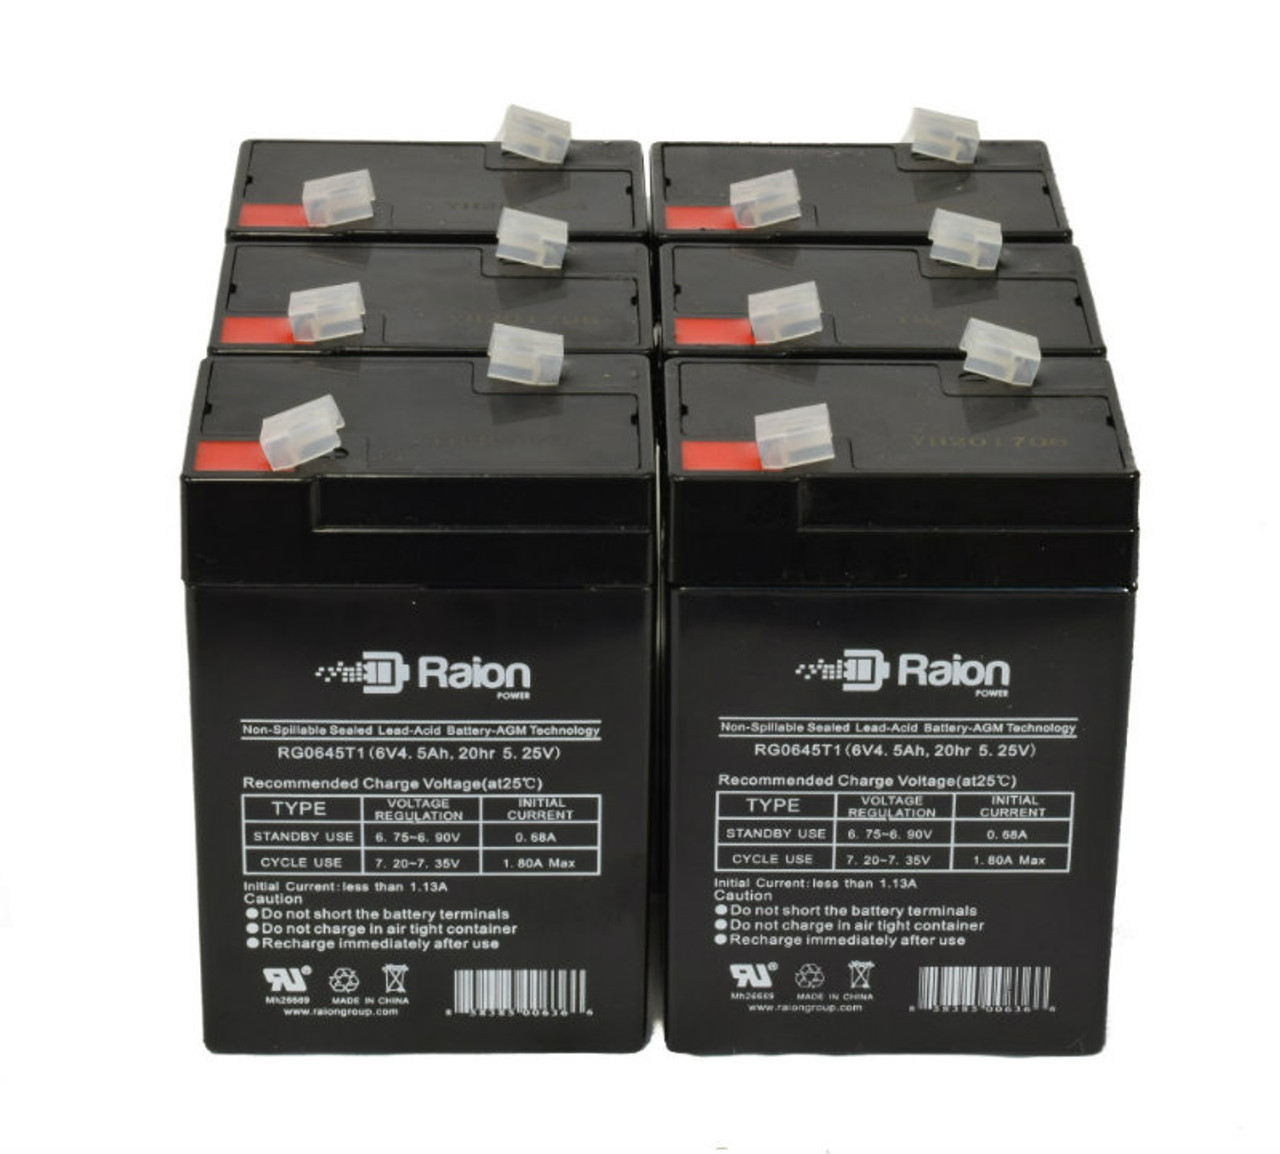 Raion Power 6 Volt 4.5Ah RG0645T1 Replacement Battery for Wangpin 3FM5.5 - 6 Pack